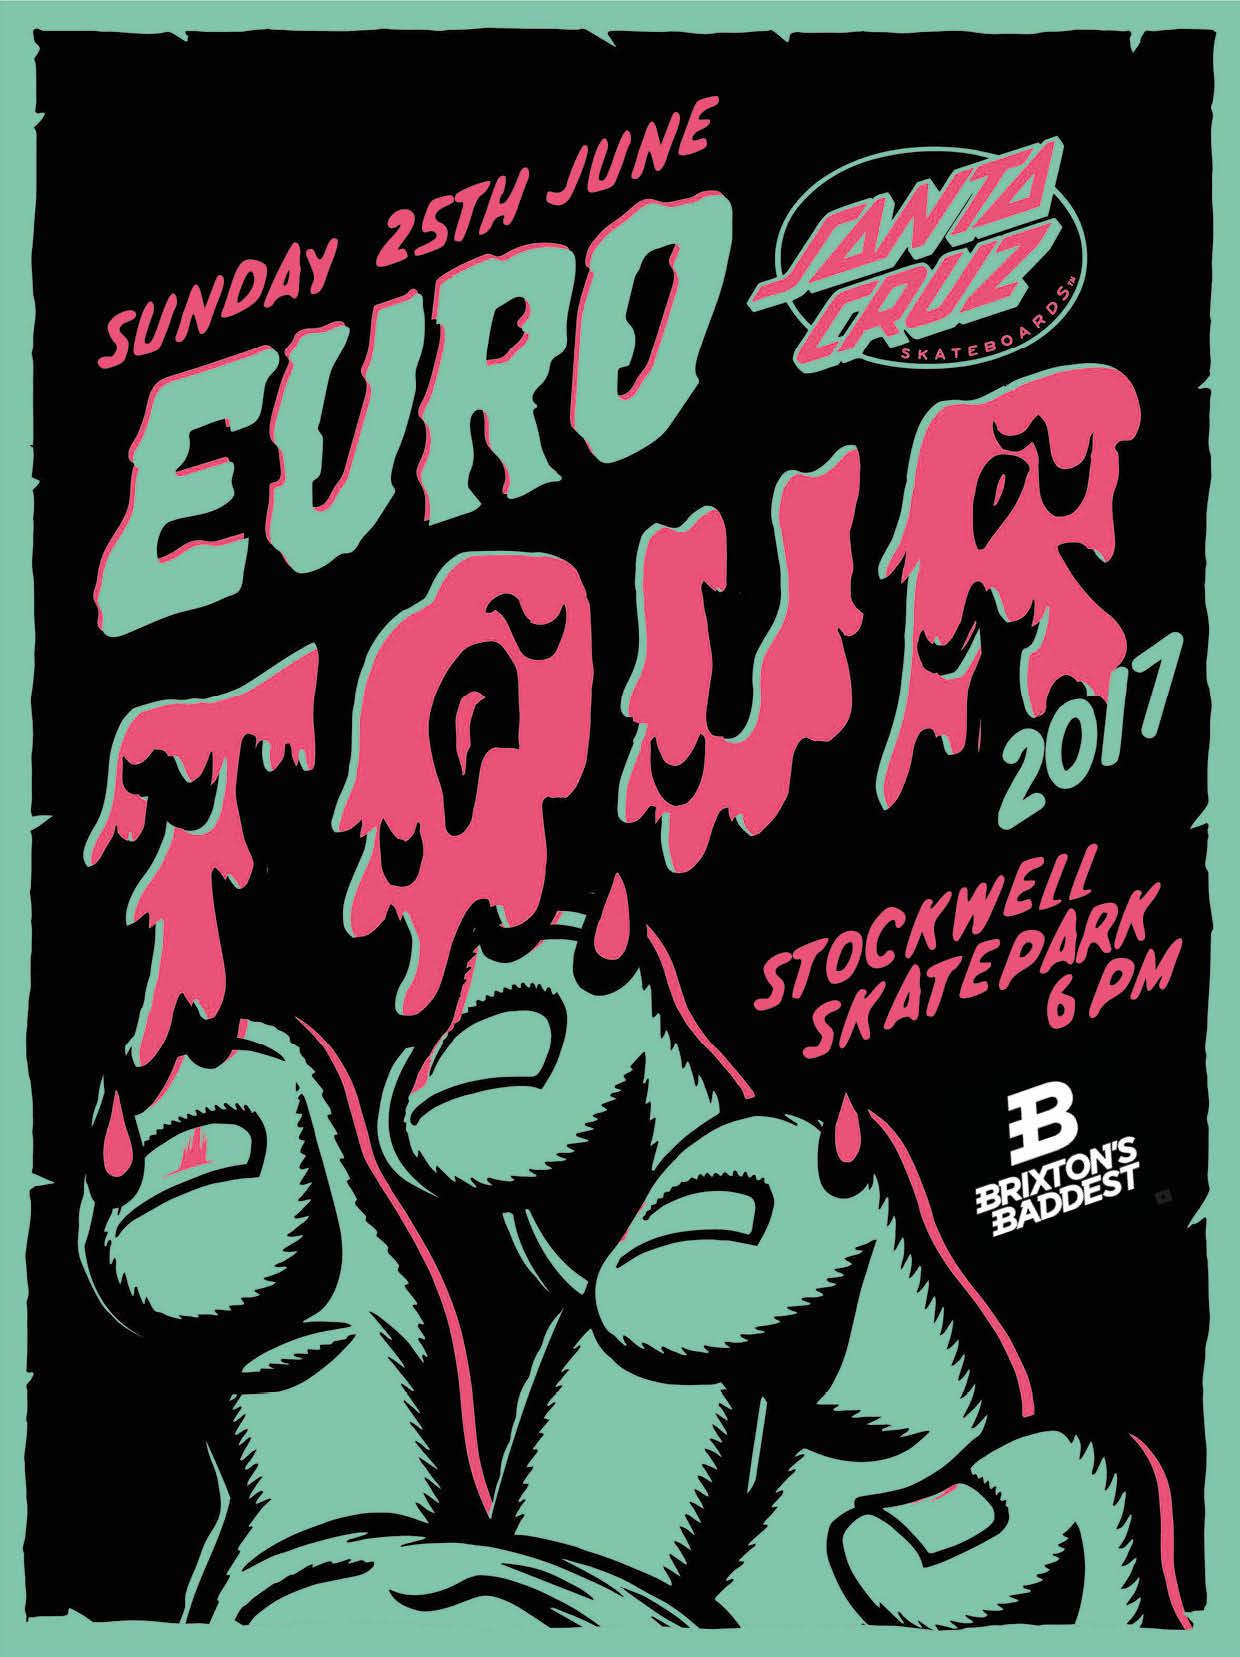 The Santa Cruz Euro Tour 2017 cover